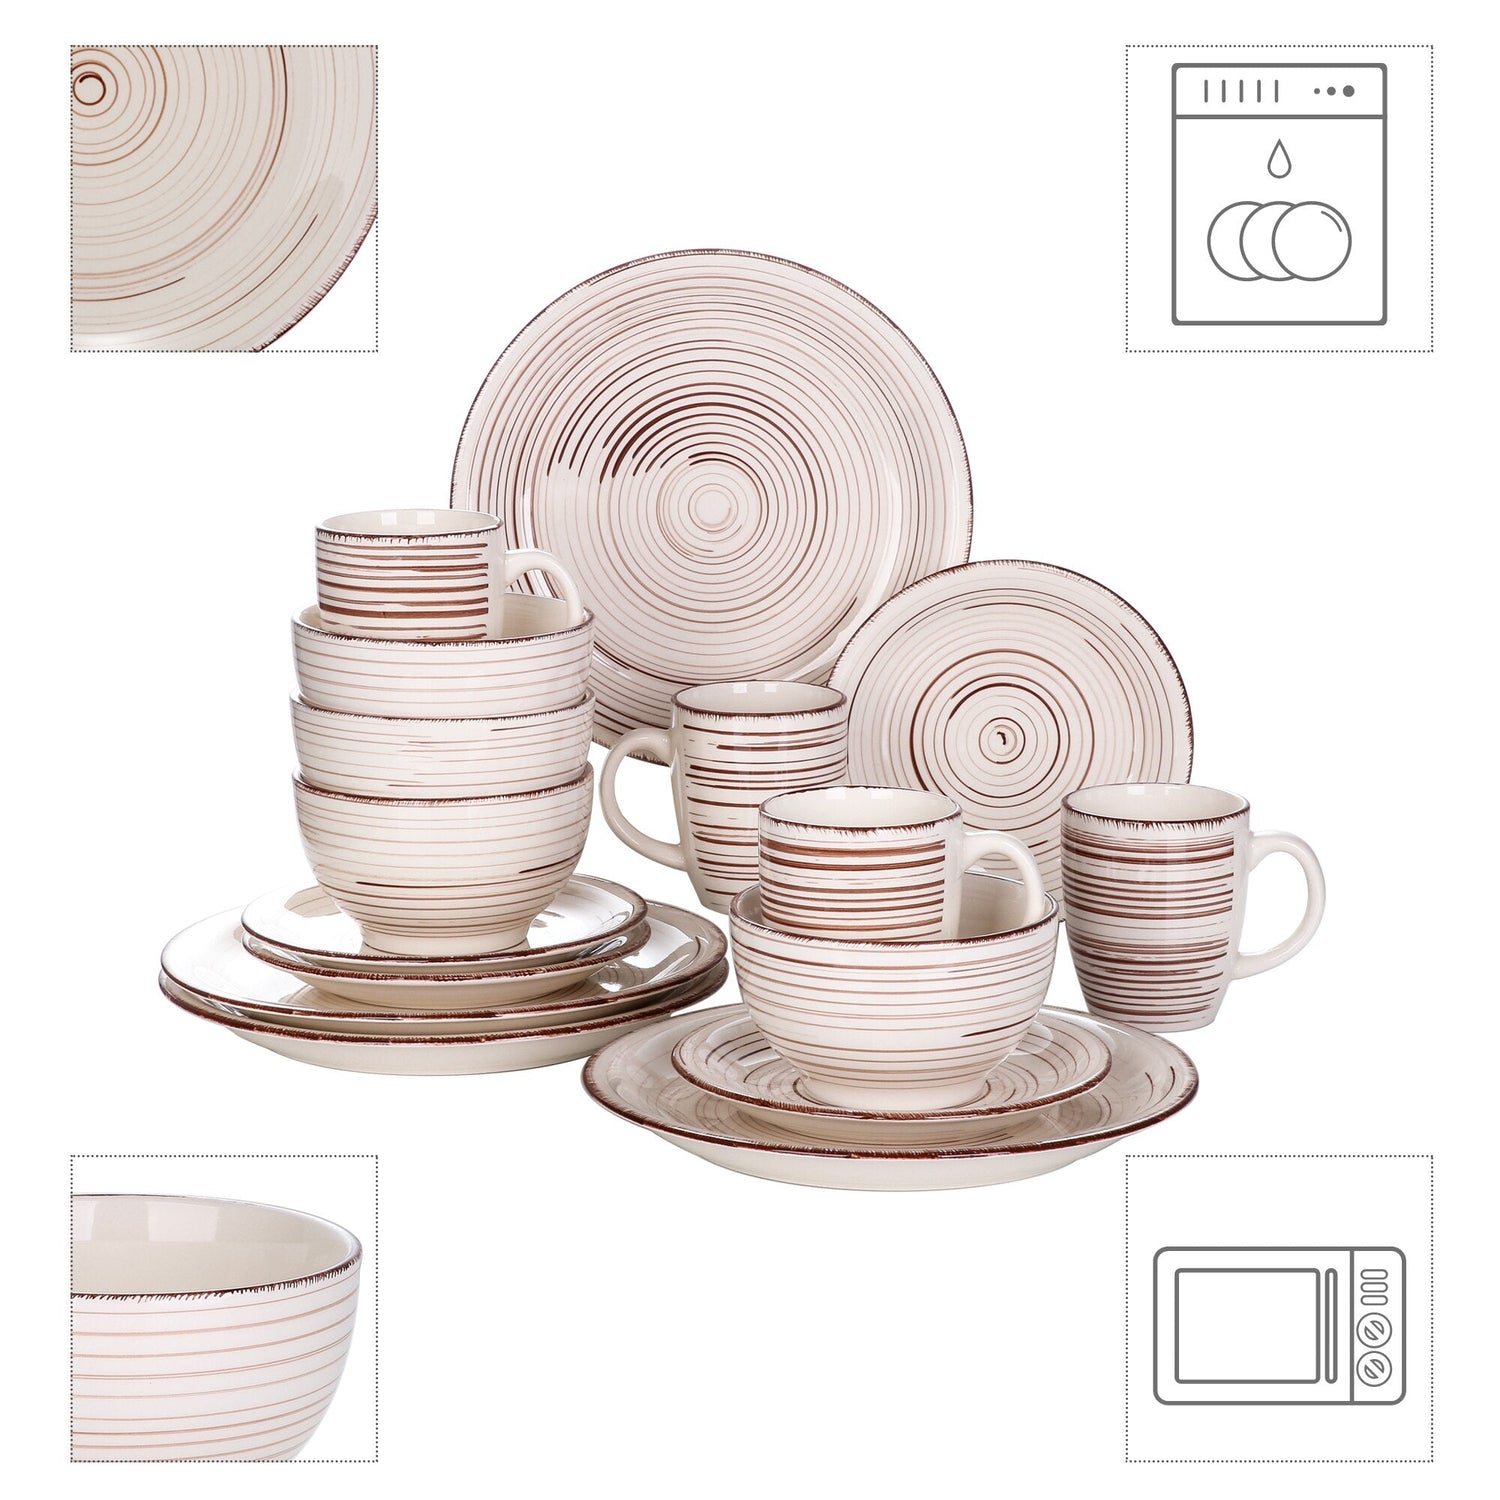 BELLA-BG 16-Pieces Porcelain Dinner Set - Nordic Side - 16, BELLABG, Ceramic, Dinner, Look, Pieces, Plate, PlateBowlMug, PlateDessert, Porcelain, Set, Vancasso, Vintage, with